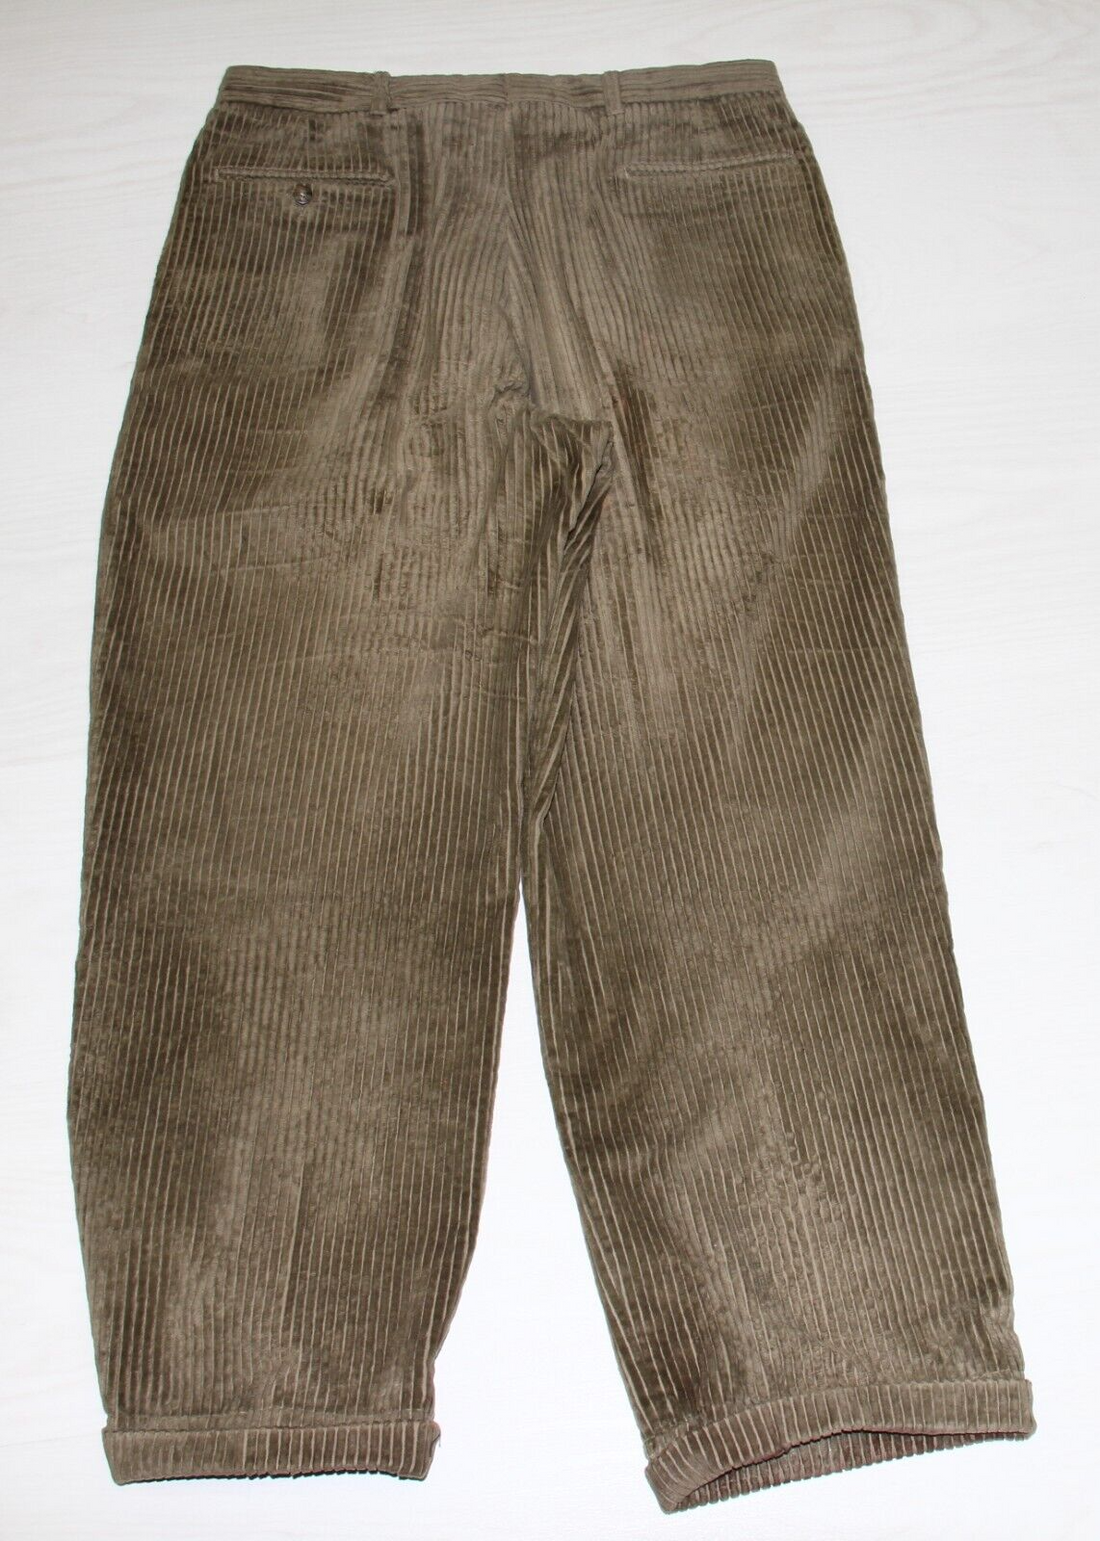 Vintage Berle Corduroy Pants Size 33 X 28.5 Taupe Made USA